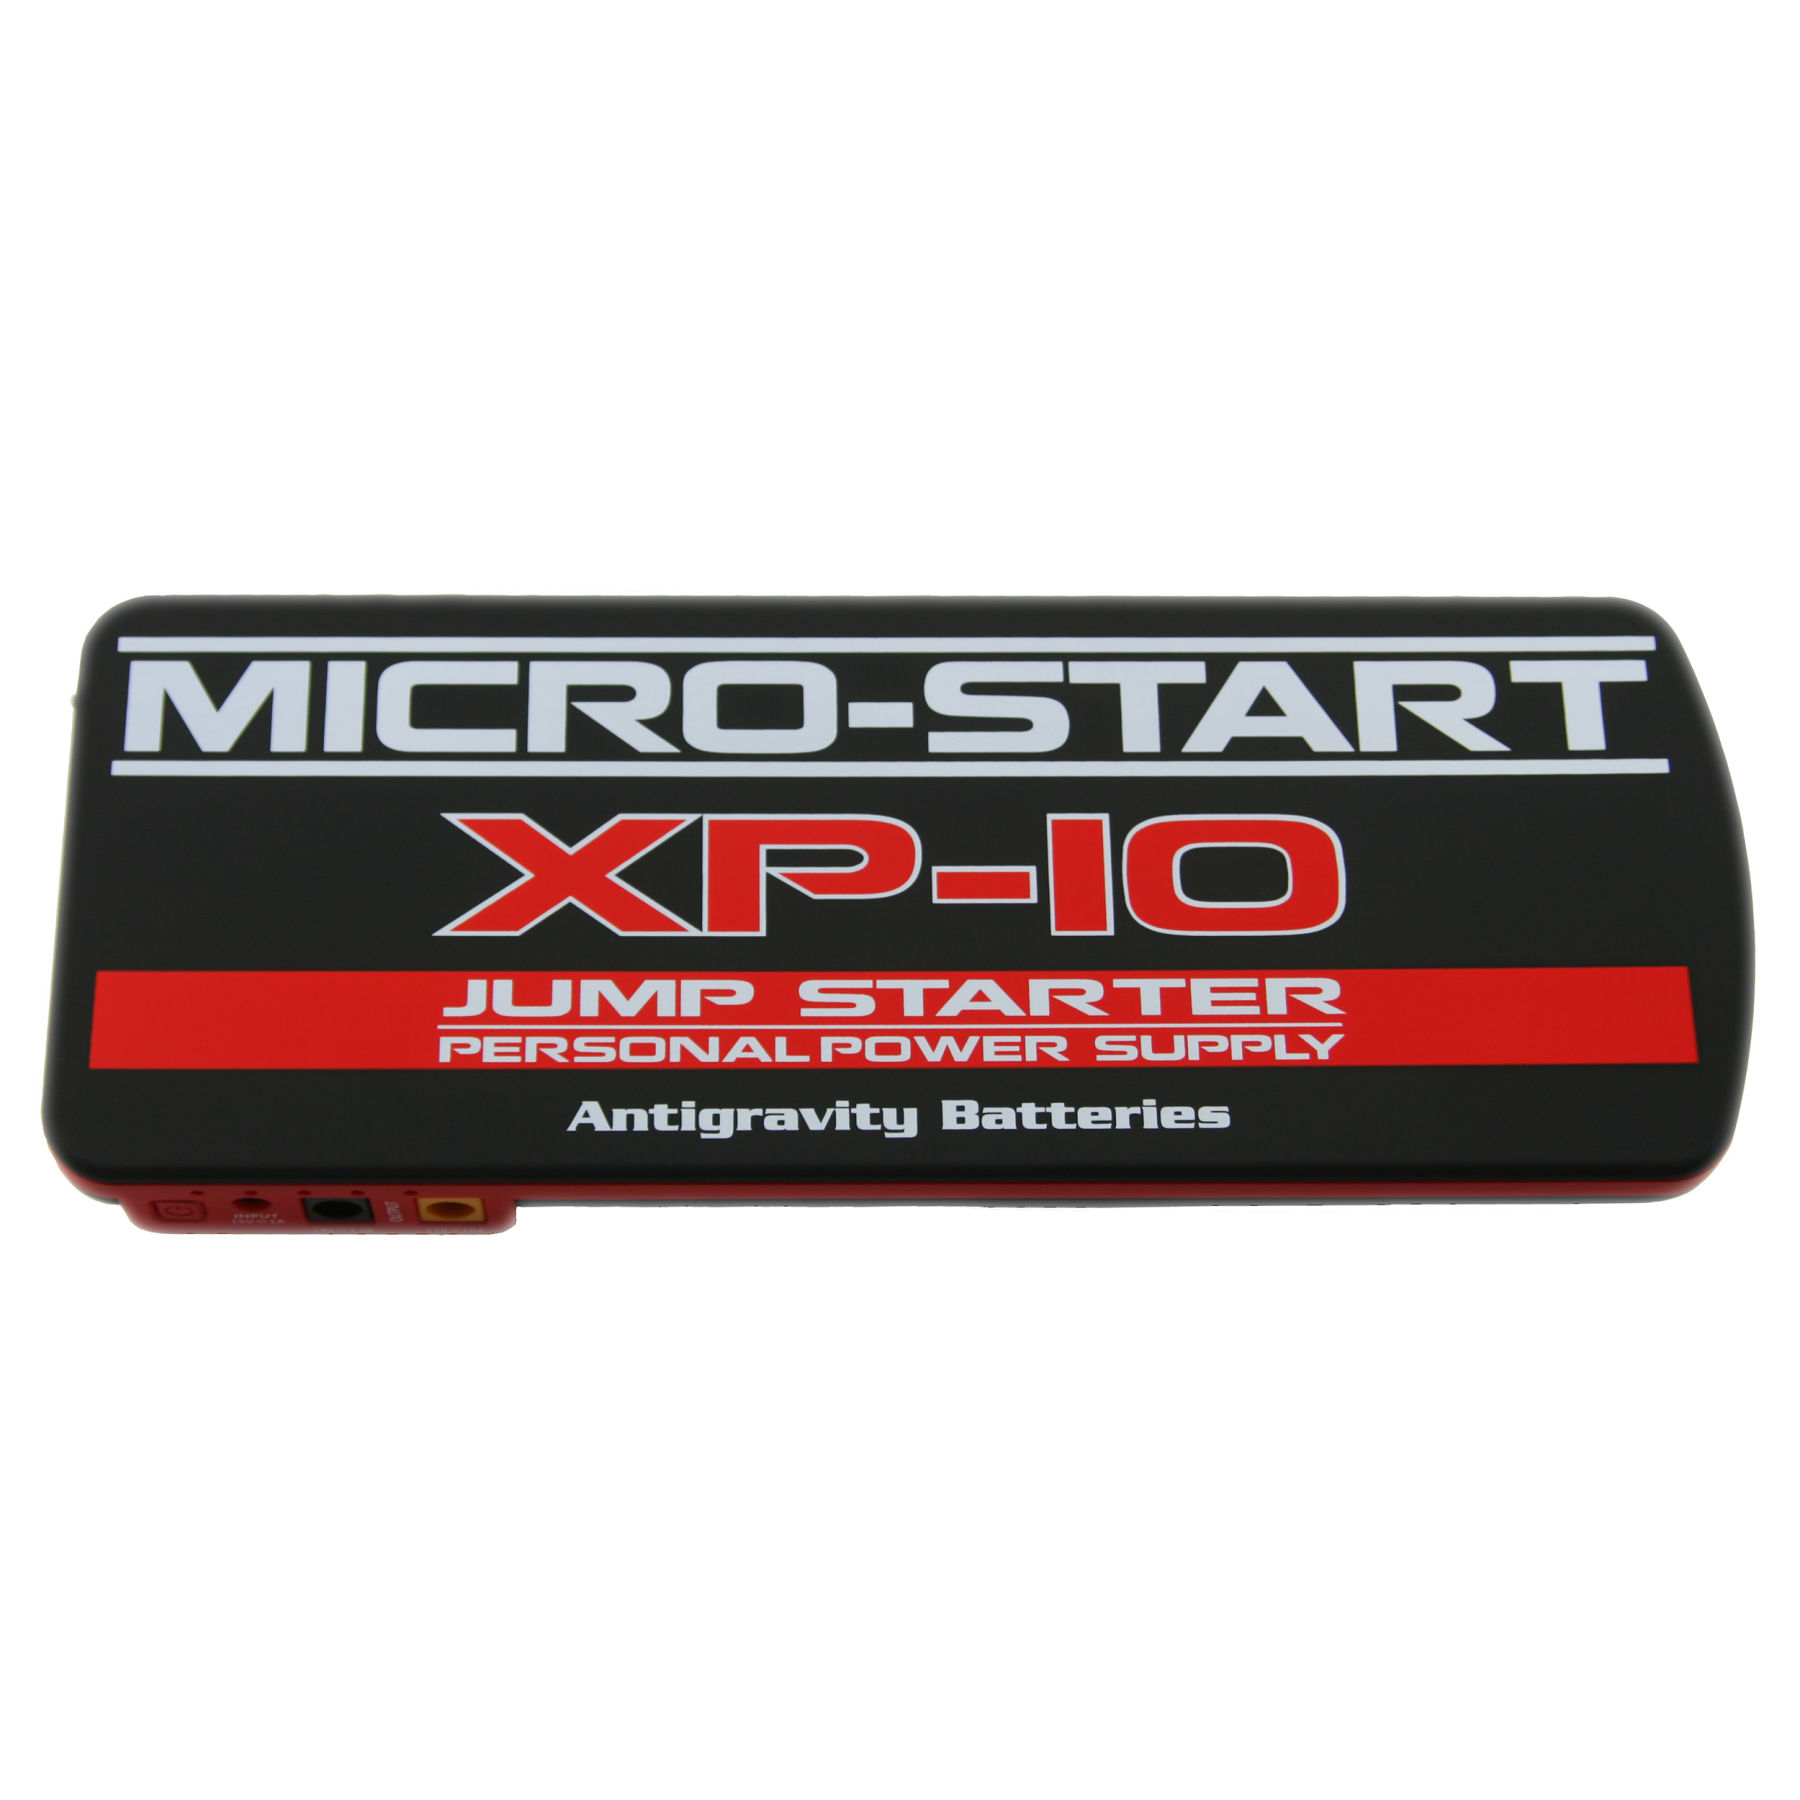 Antigravity 12v Micro-Start XP-10 Personal Power Supply Jump Starter